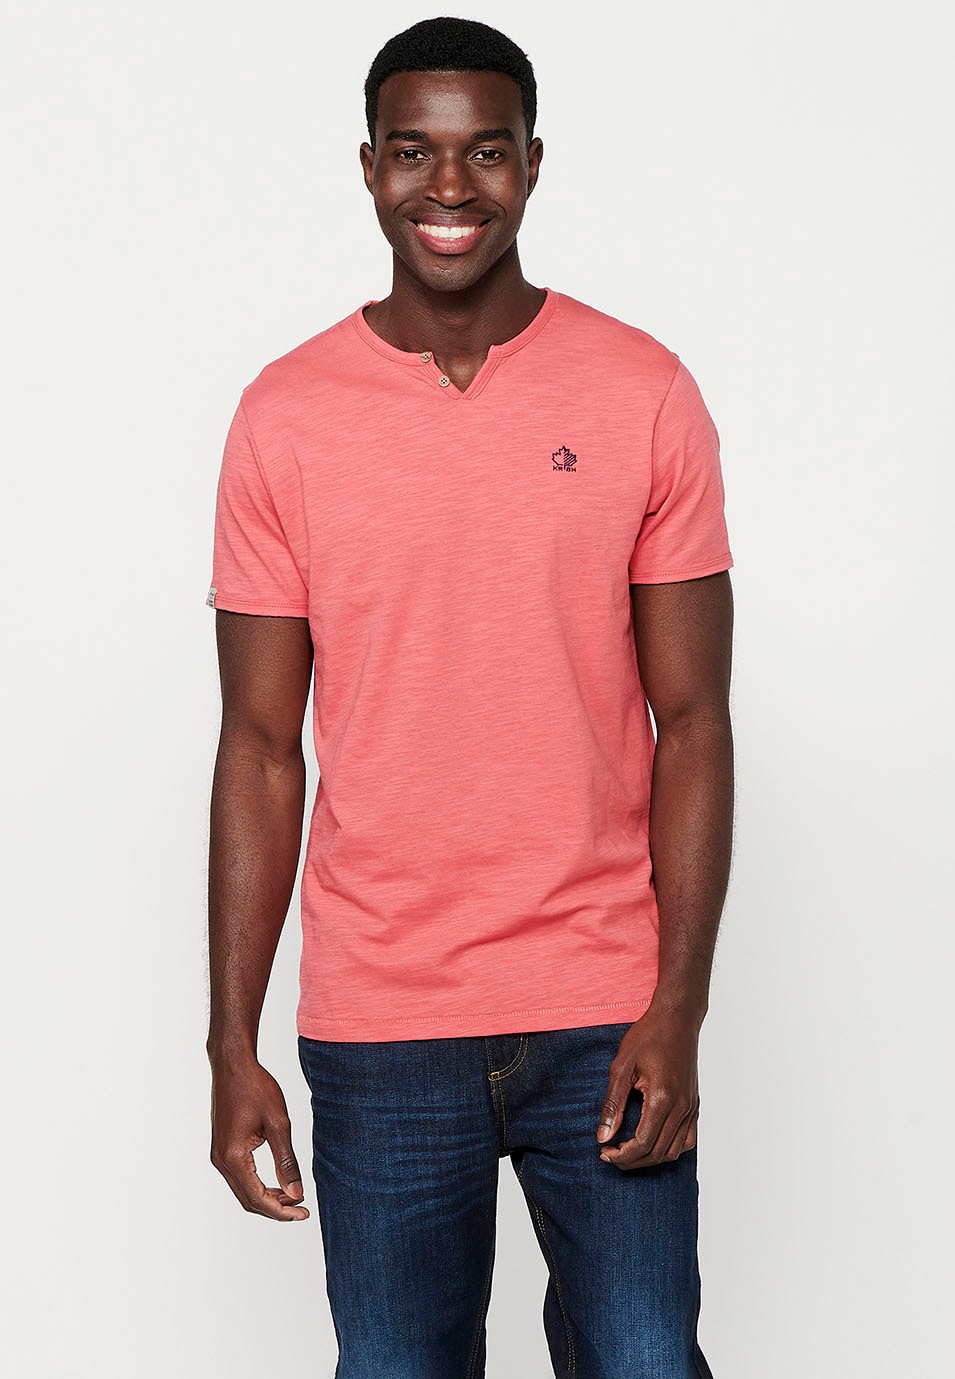 Basic short-sleeved cotton T-shirt, V-neck with button, pink color for men 4